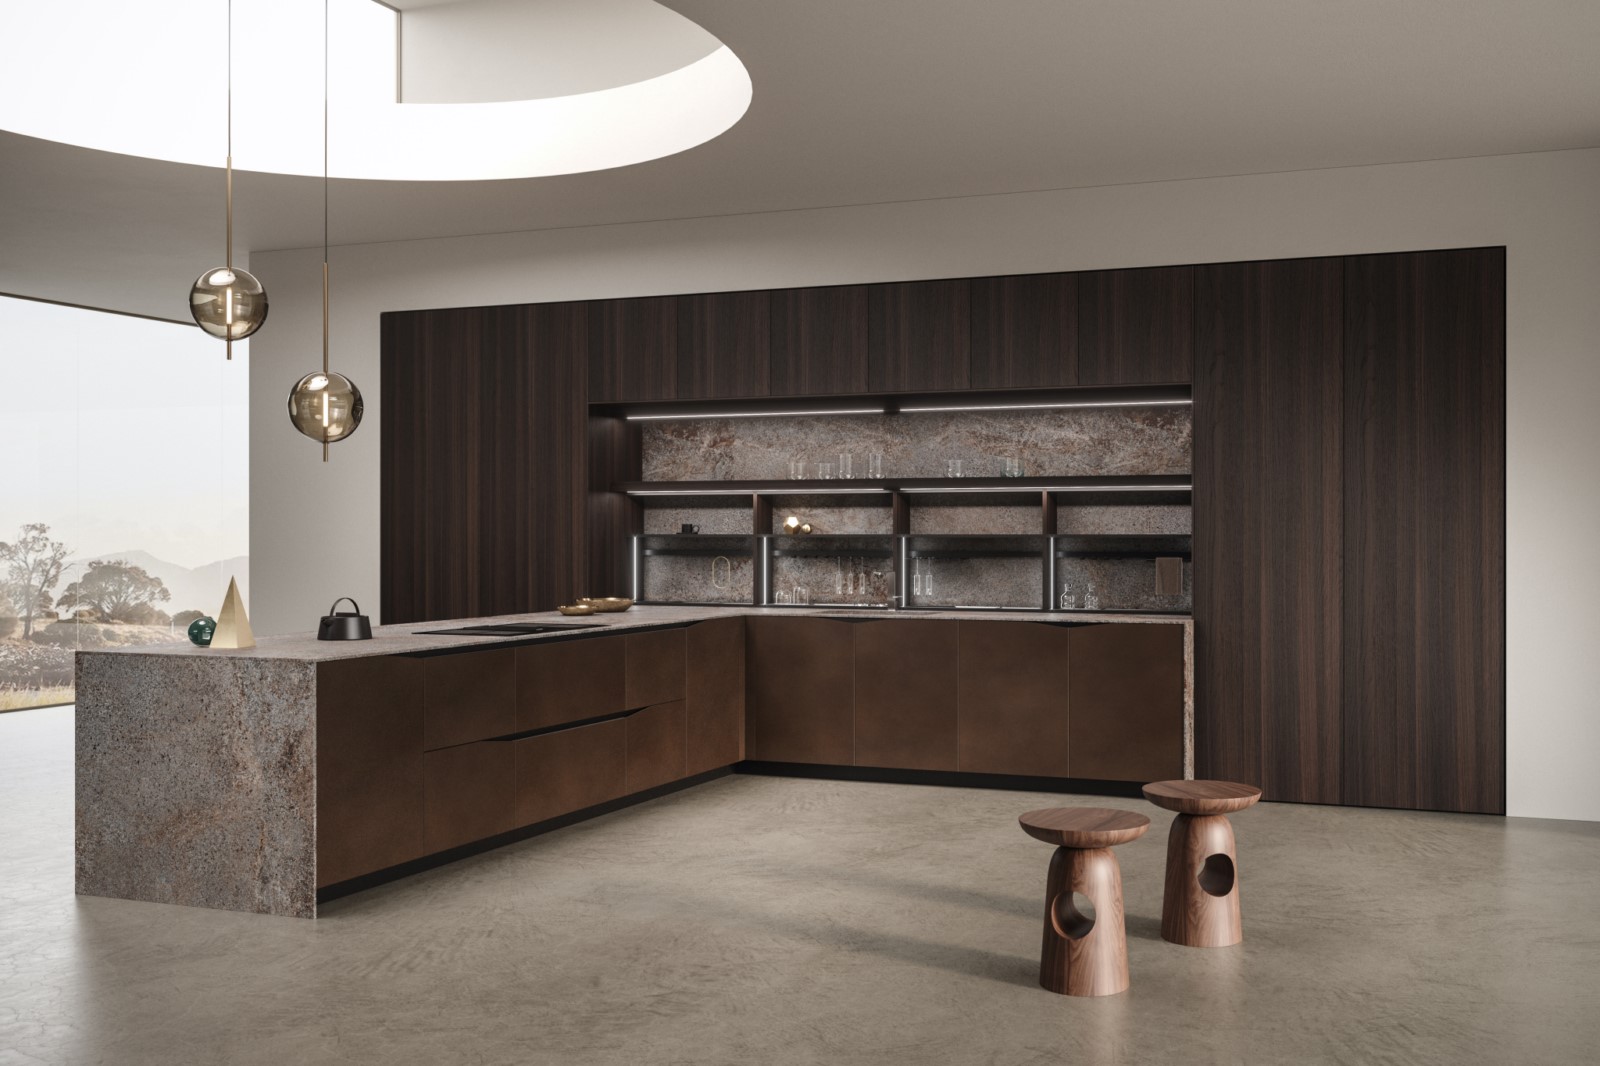 Foto: Italiaanse design keuken Snaidero Elementi Donker hout Gun Metal Tieleman Keukens 2  1600x1200 